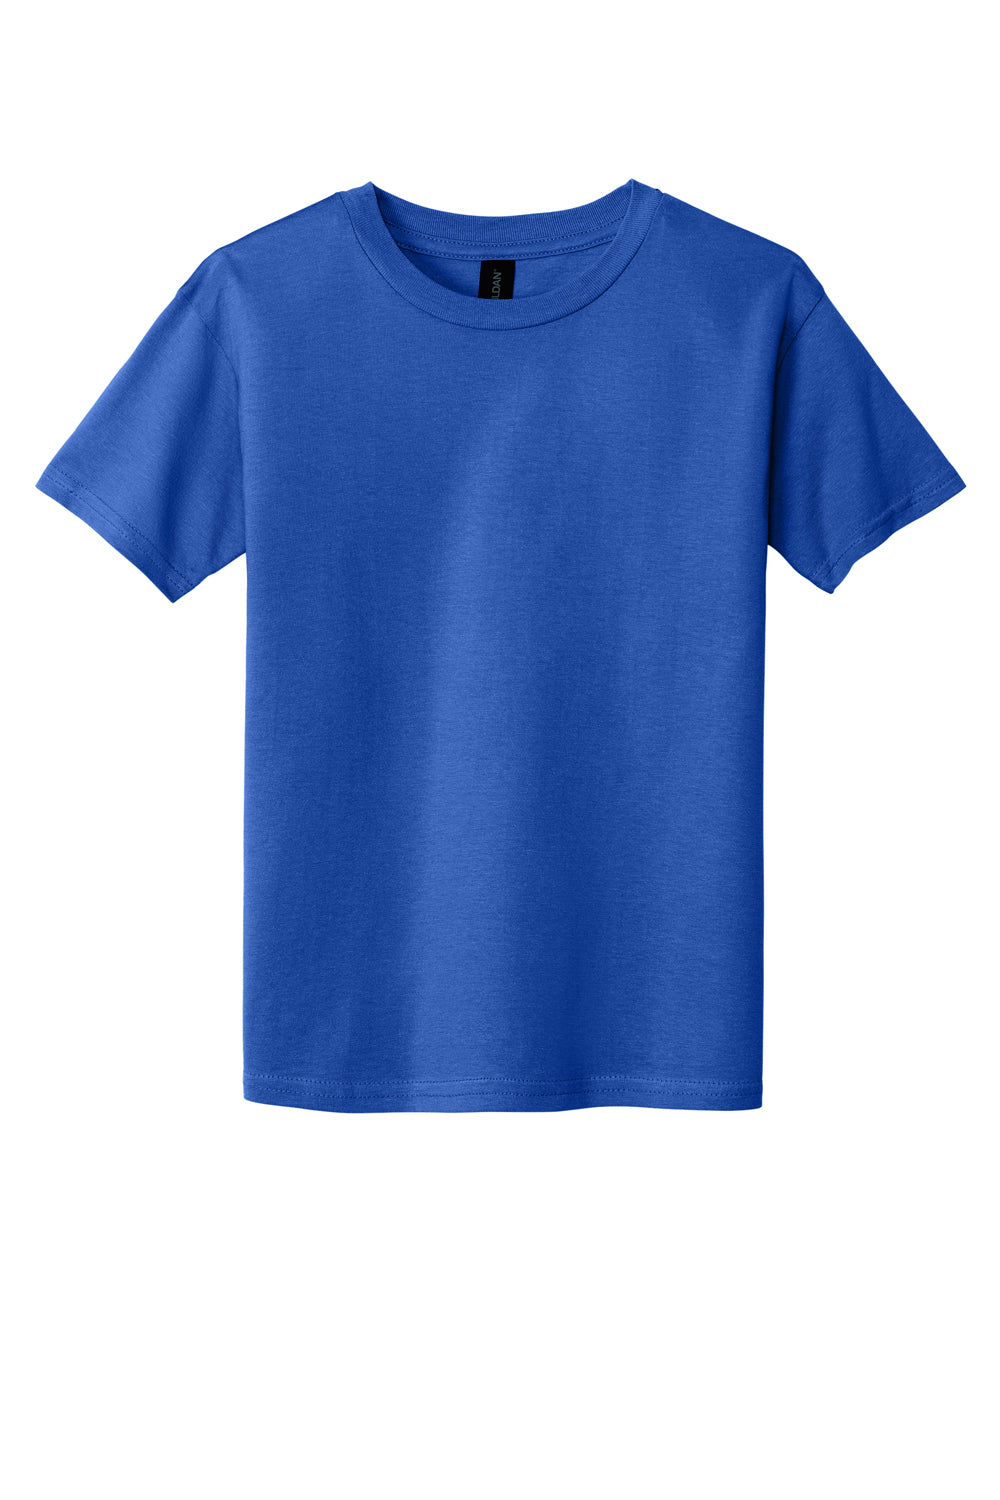 Gildan Youth Softstyle Short Sleeve Crewneck T-Shirt Royal Blue Flat Front